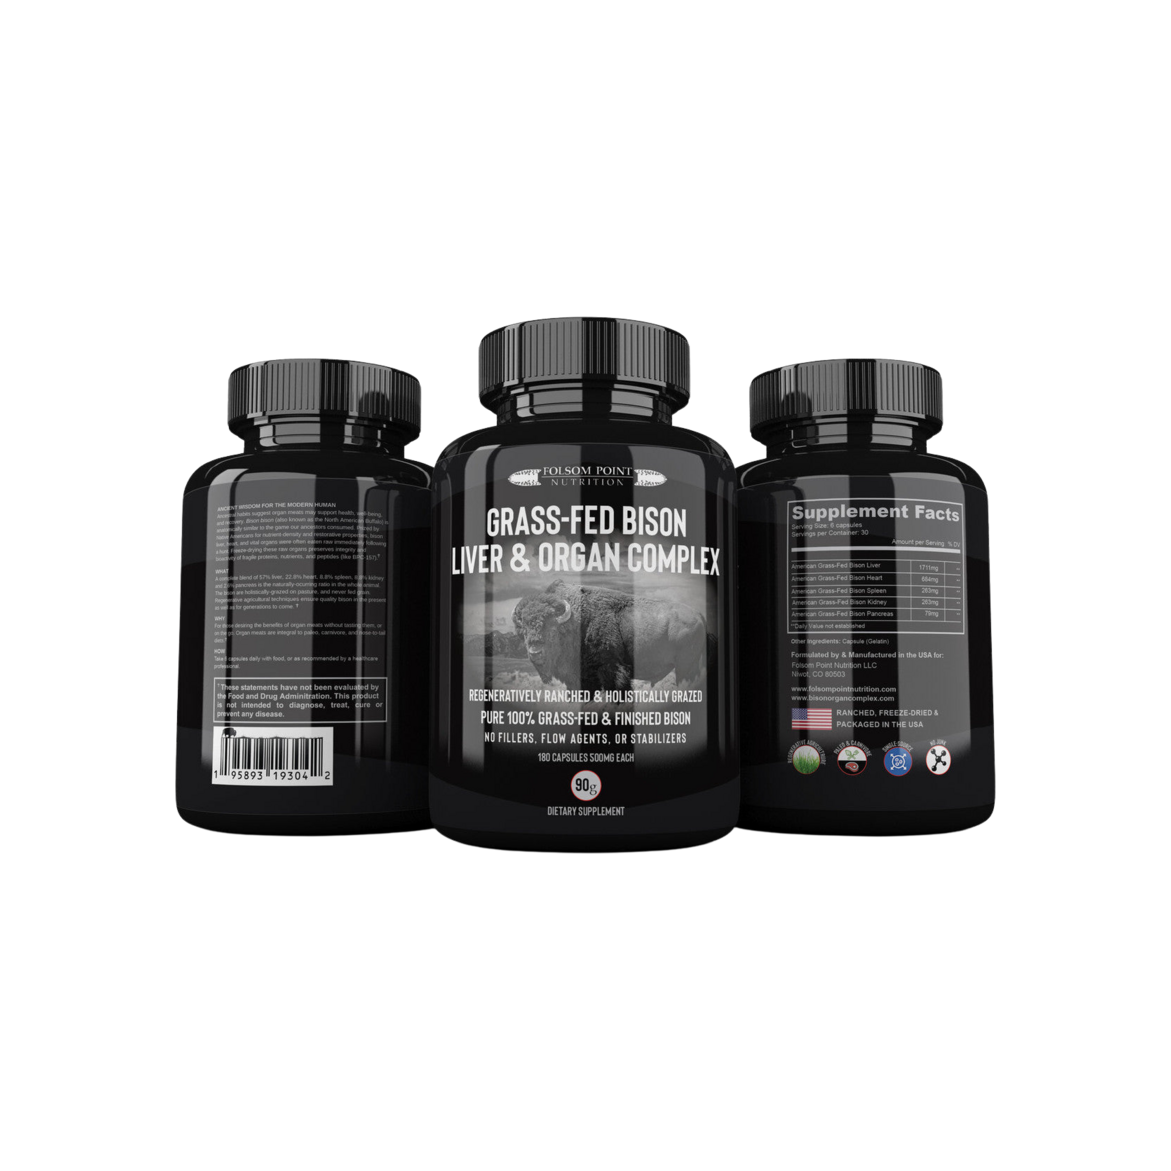 A bottle of Paleo Plex (Grass-Fed Bison Liver & Organ Complex) supplements on a black background.